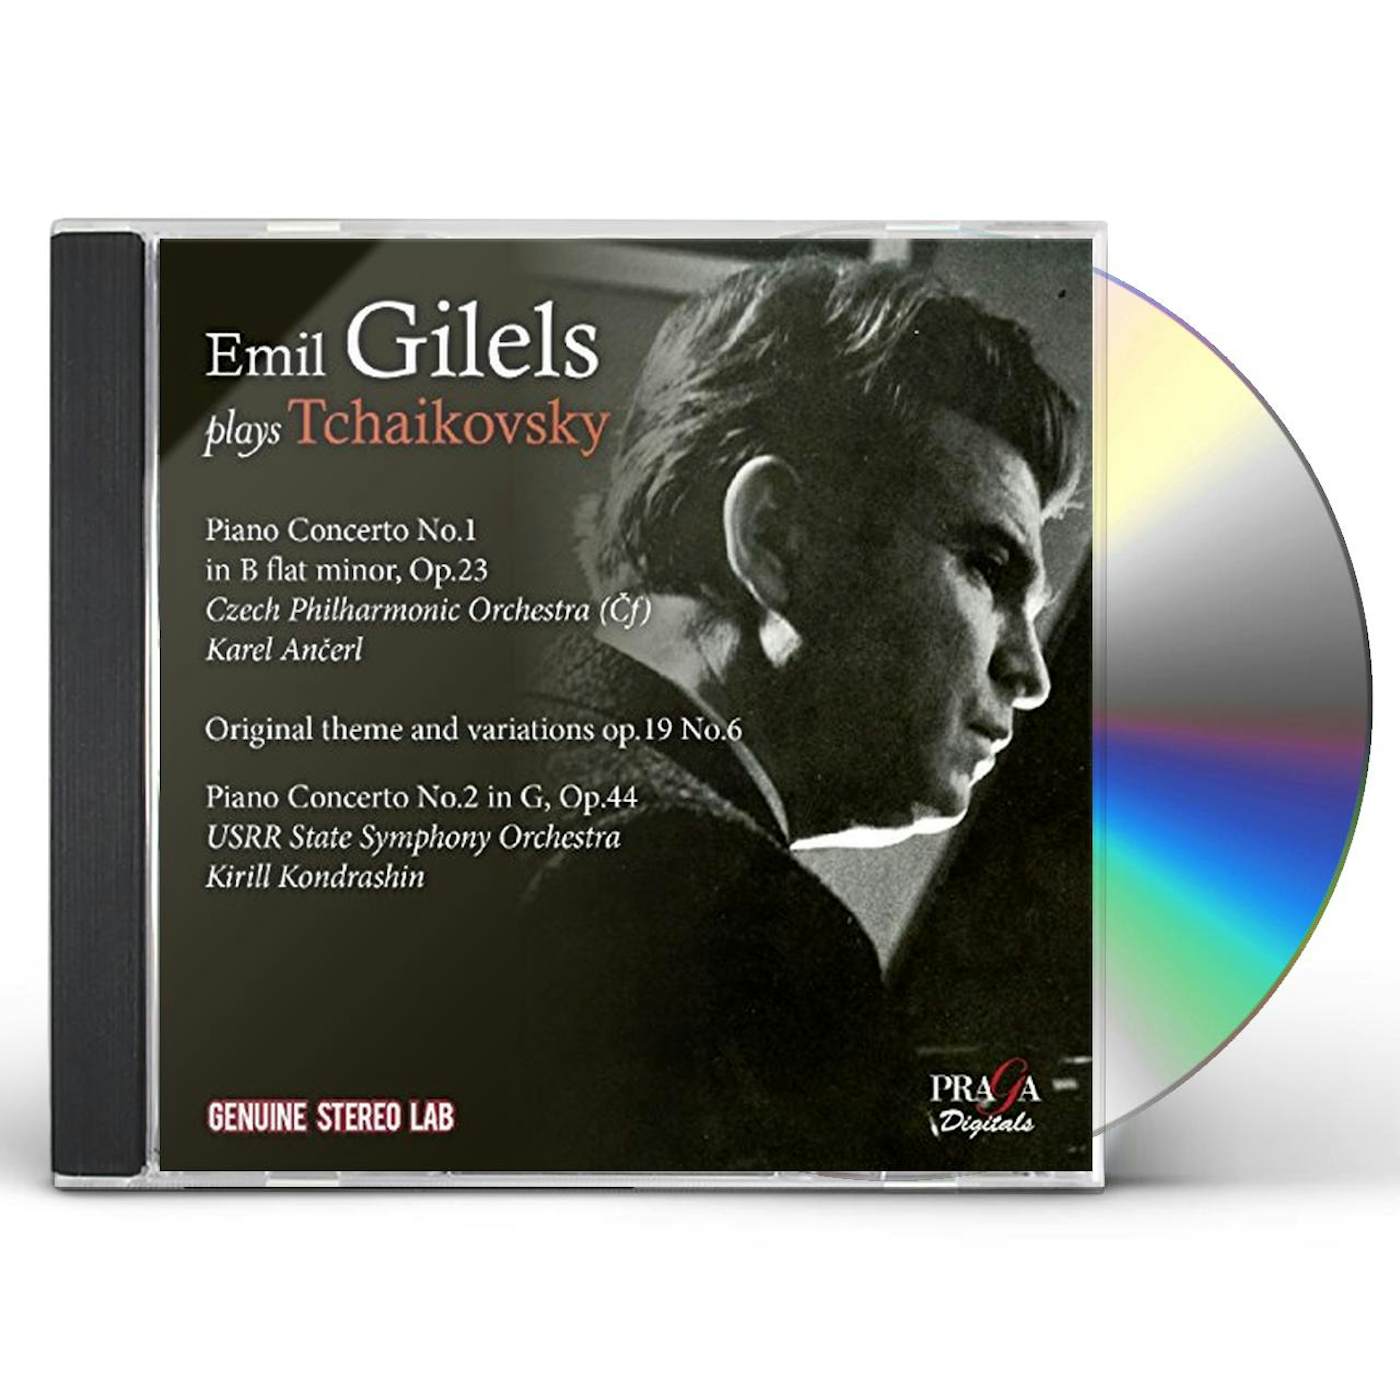 EMIL GILELS PLAYS TCHAIKOVSKY CD